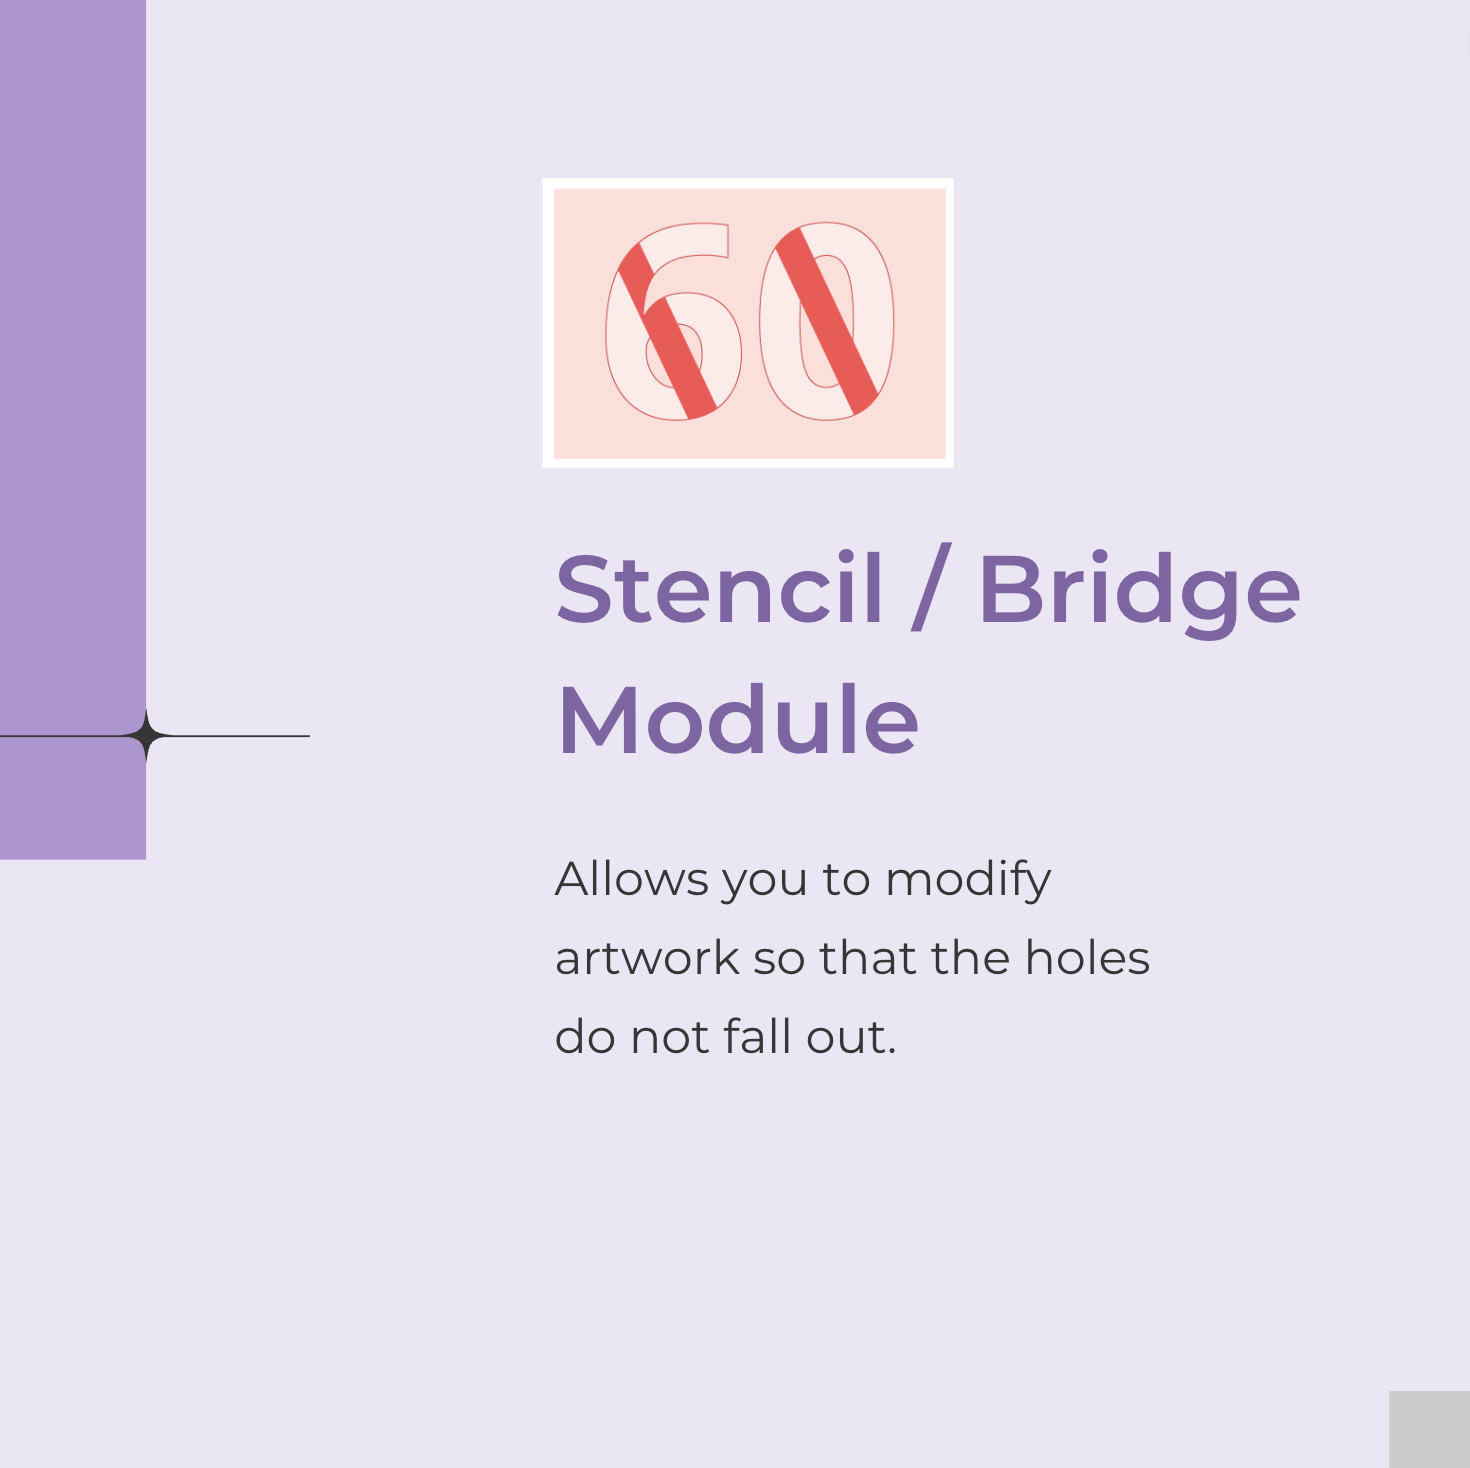 Stencil/Bridge Module